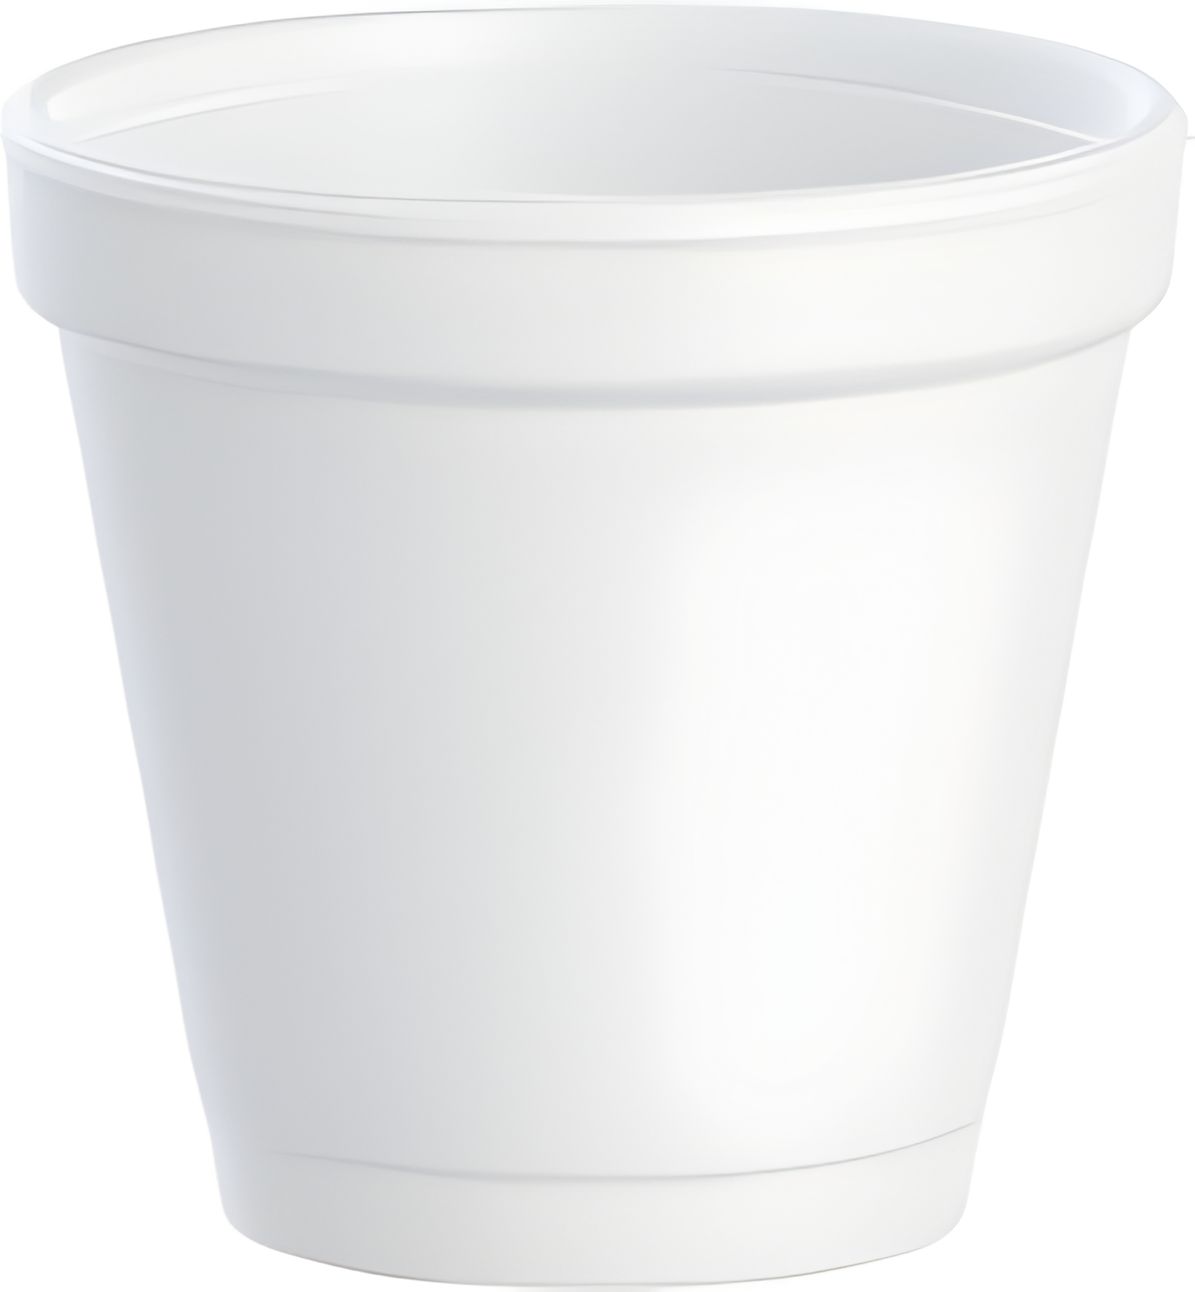 Dart Container - 4 Oz White Foam Cups, 1000/cs - 4J4